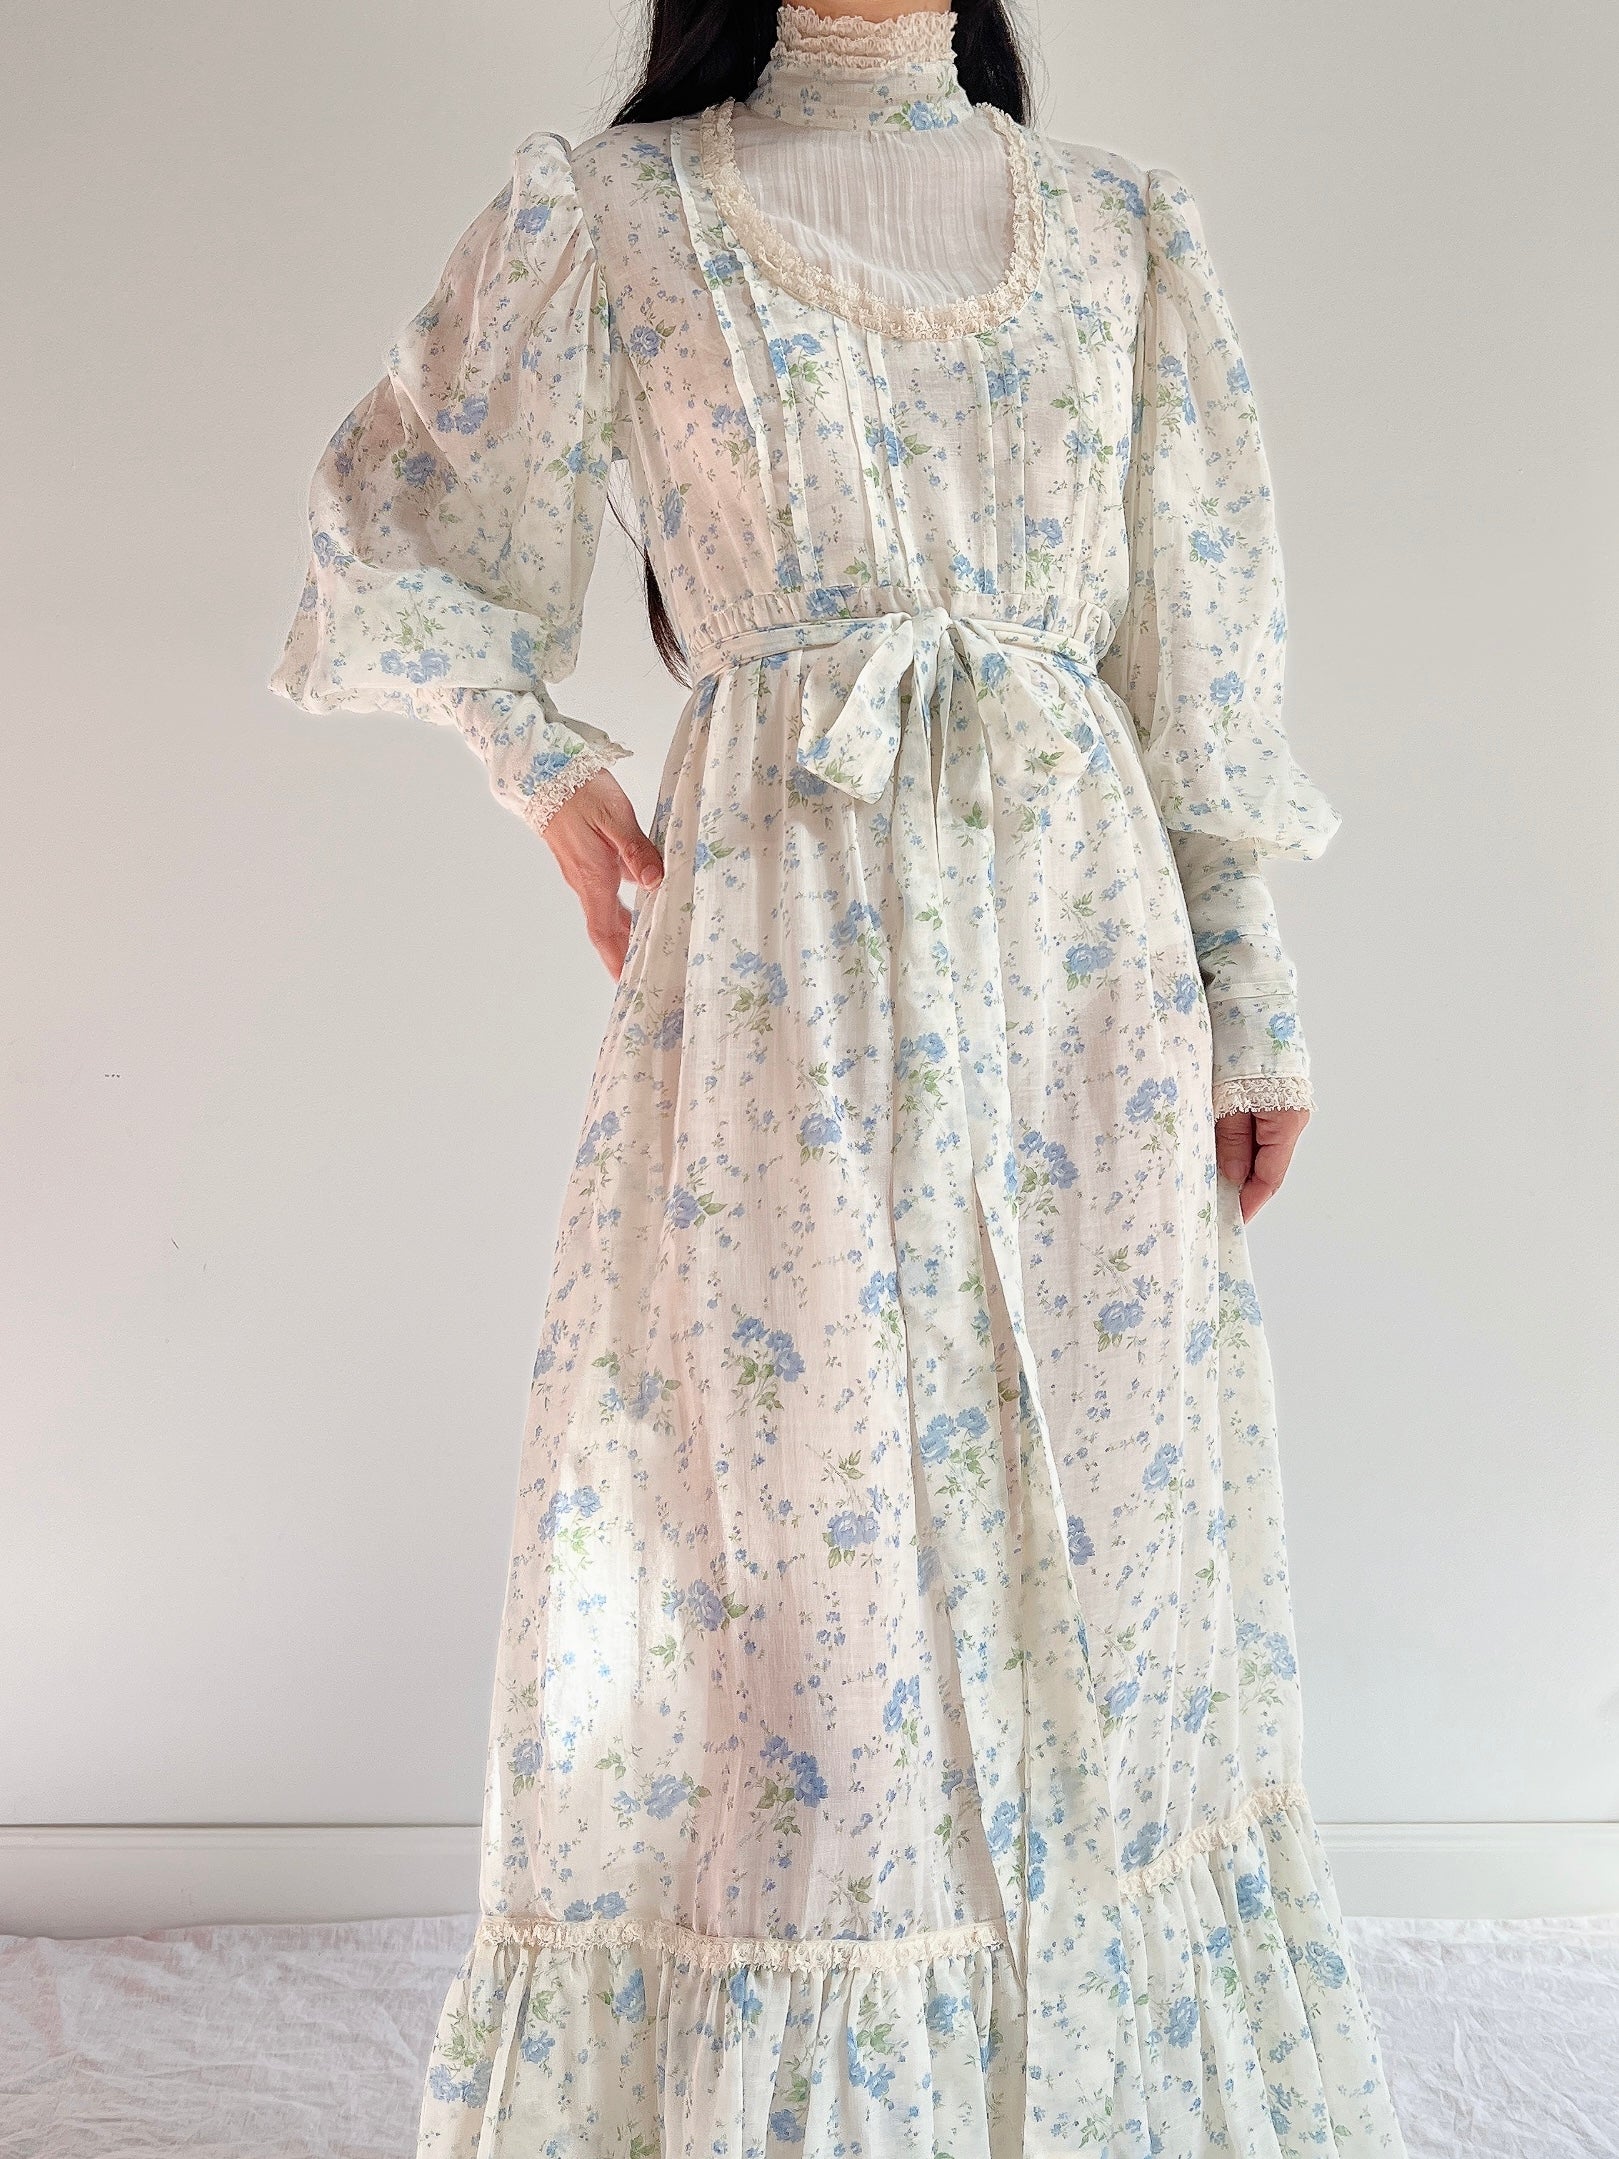 1970s Puff Sleeve Cotton Calico Dress - M